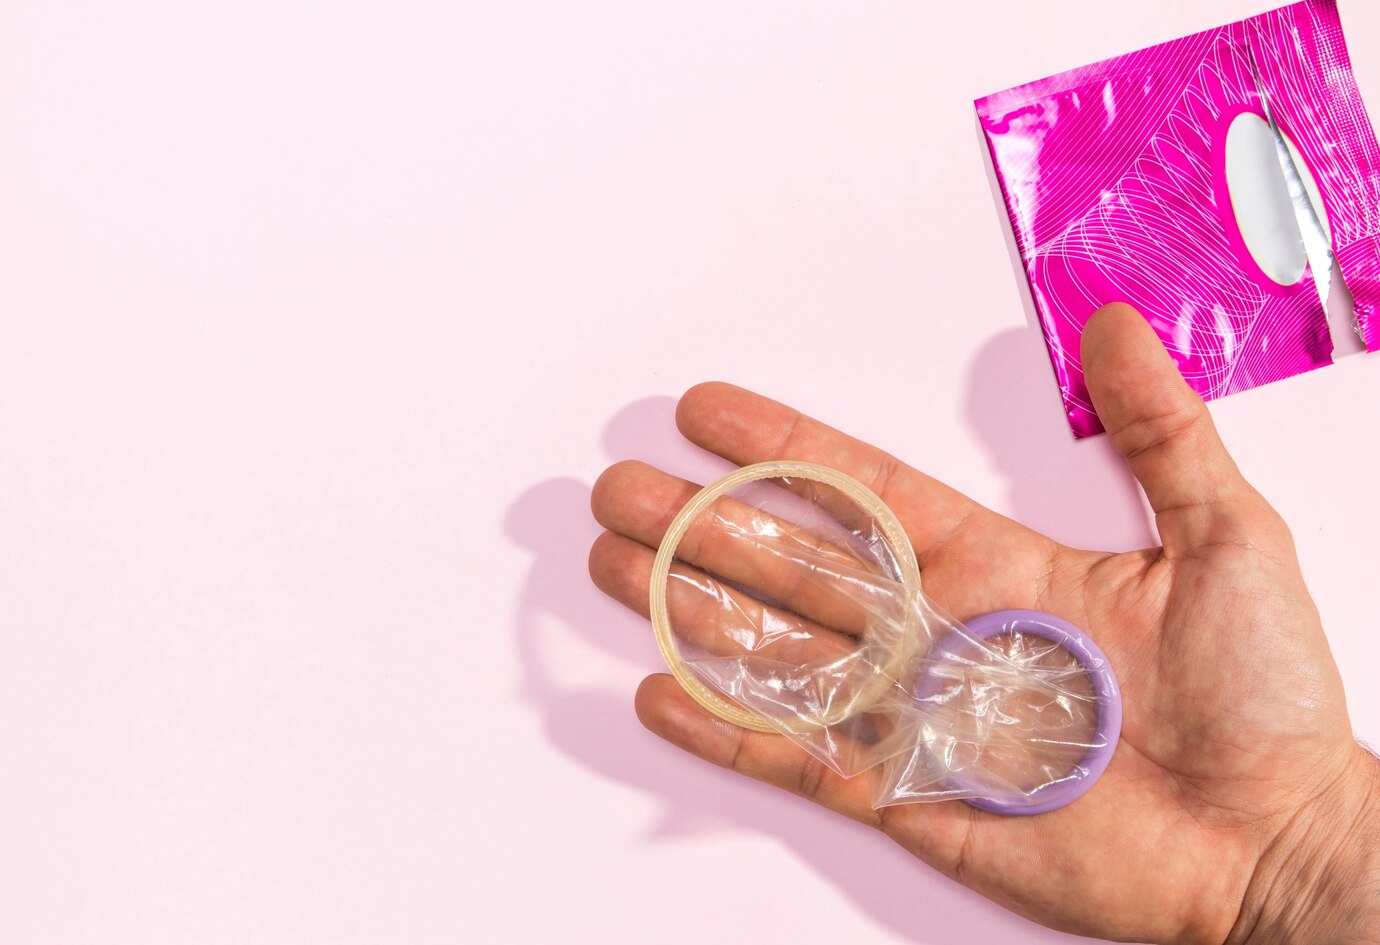 kondomy v ruce